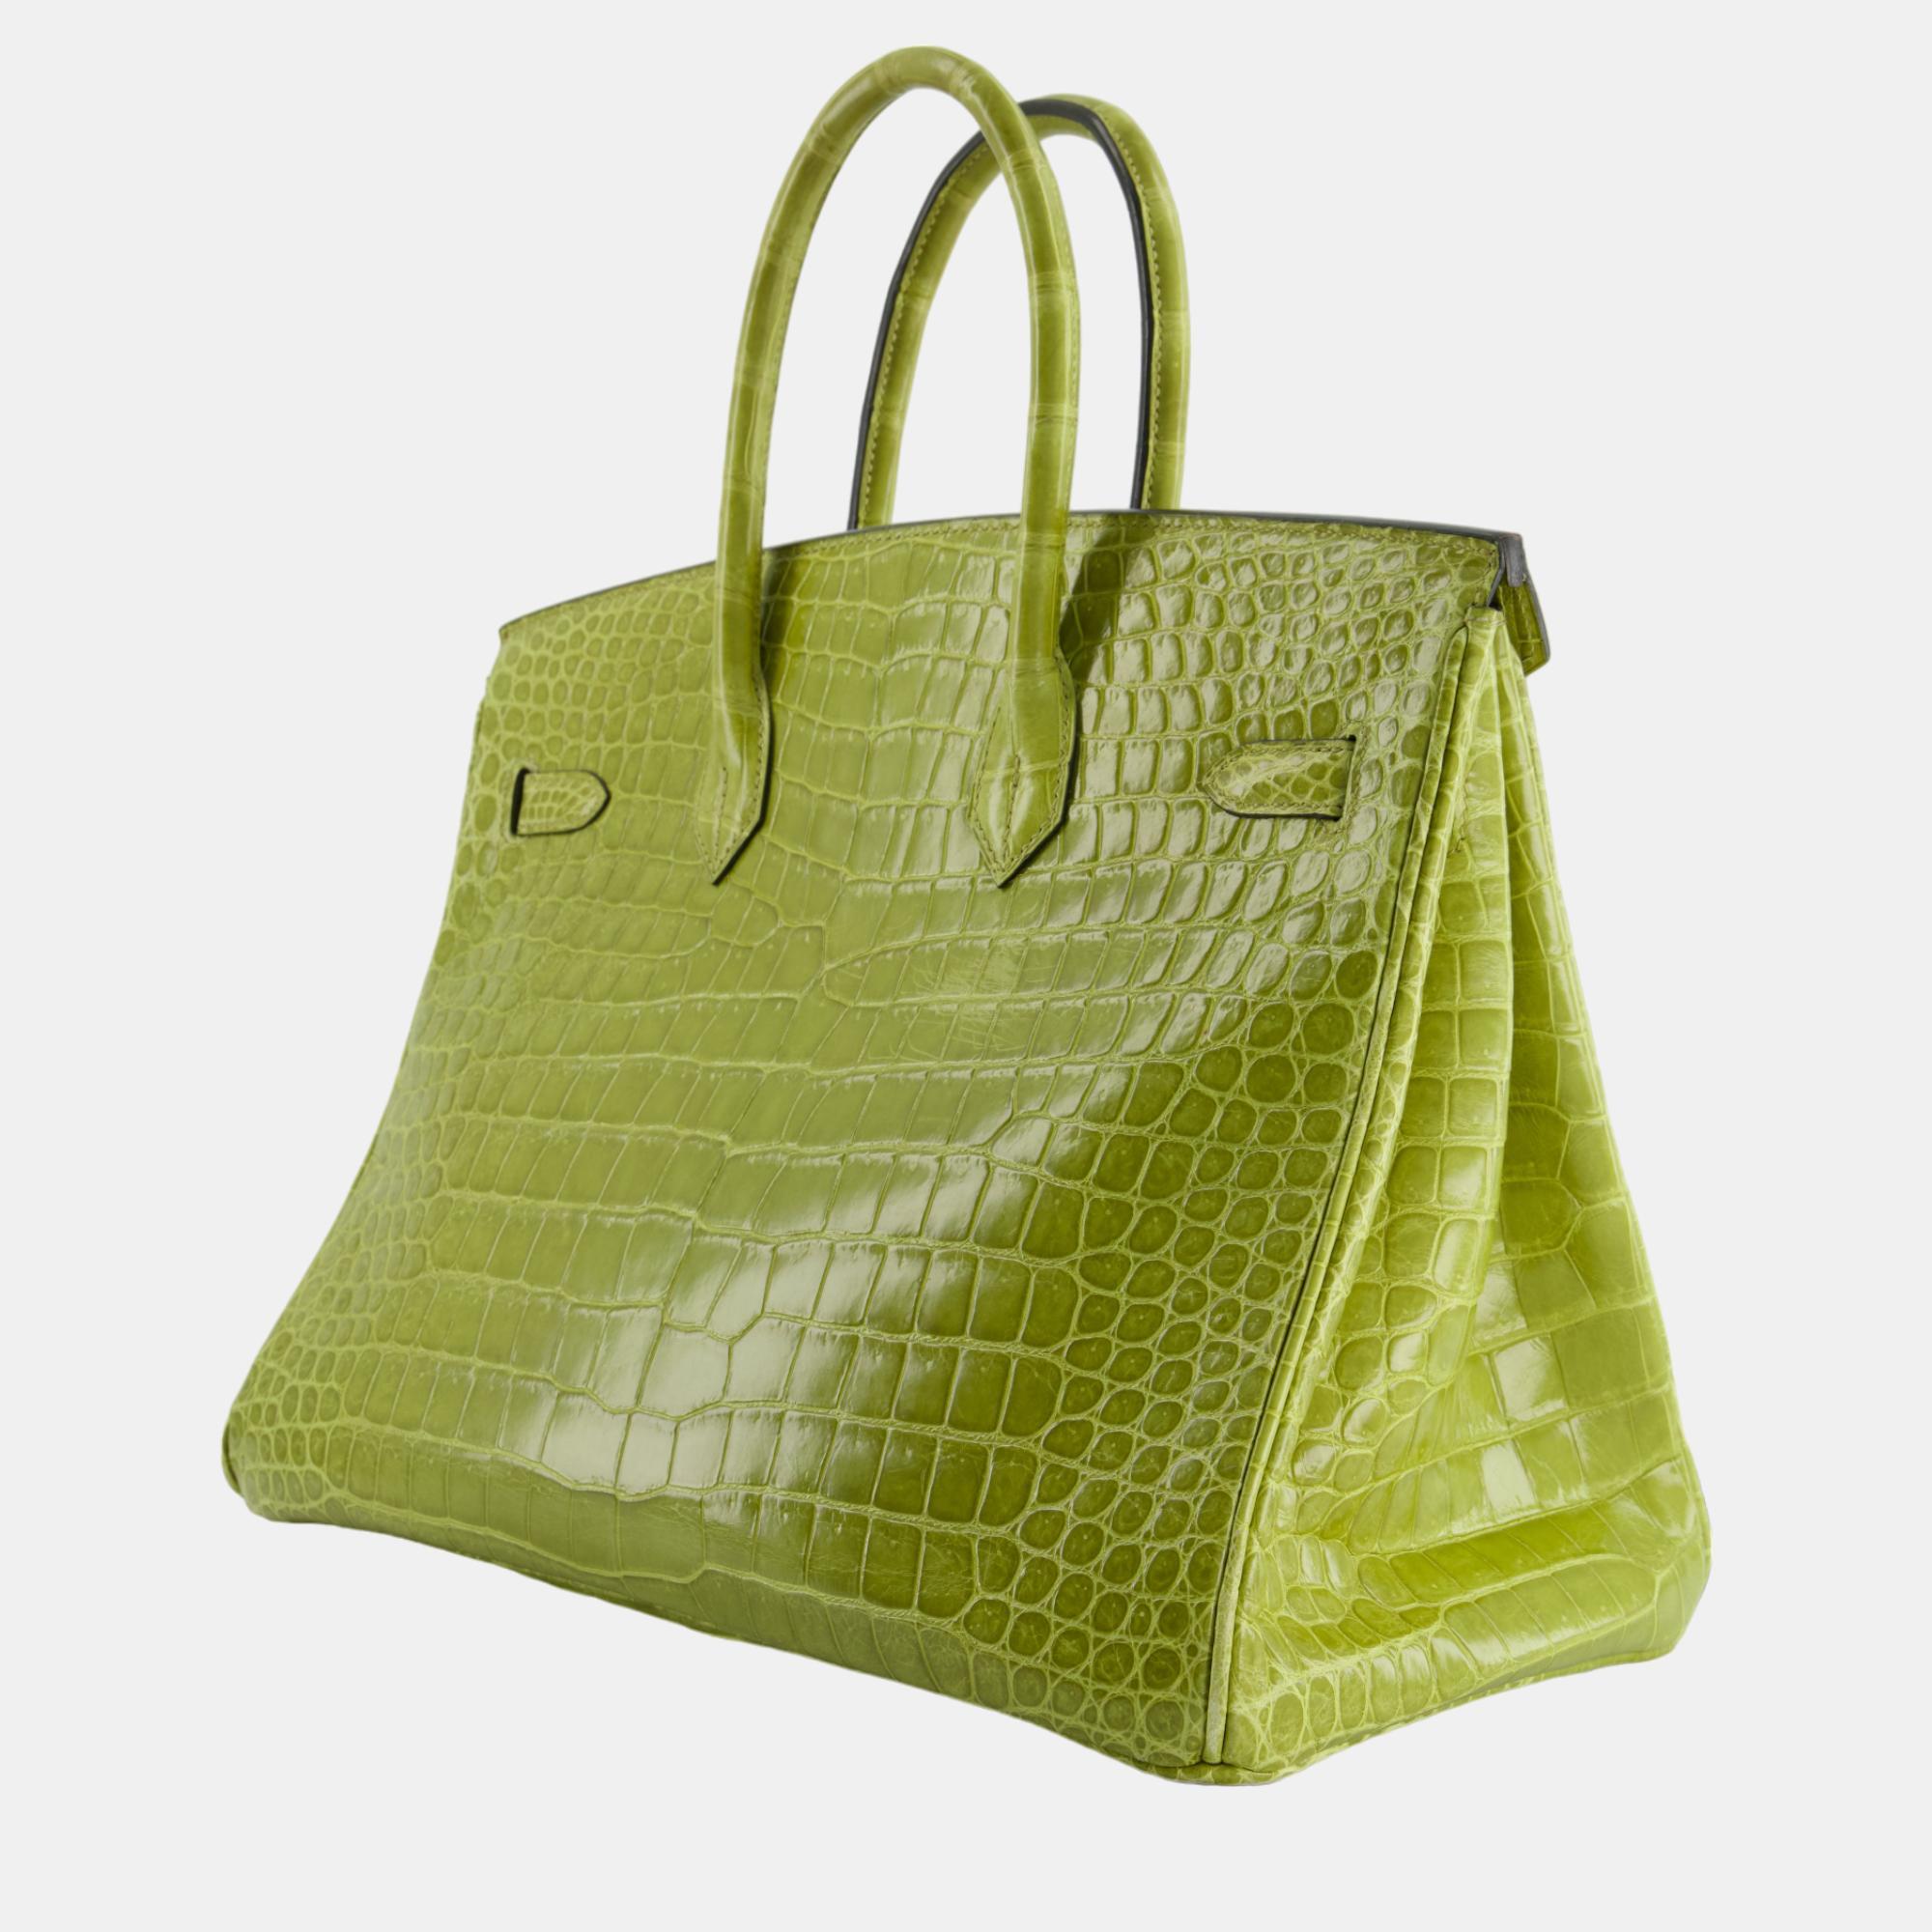 Hermes Birkin Bag 35cm In Crocodile Shiny Porosus Vert Anis Colour With Palladium Hardware